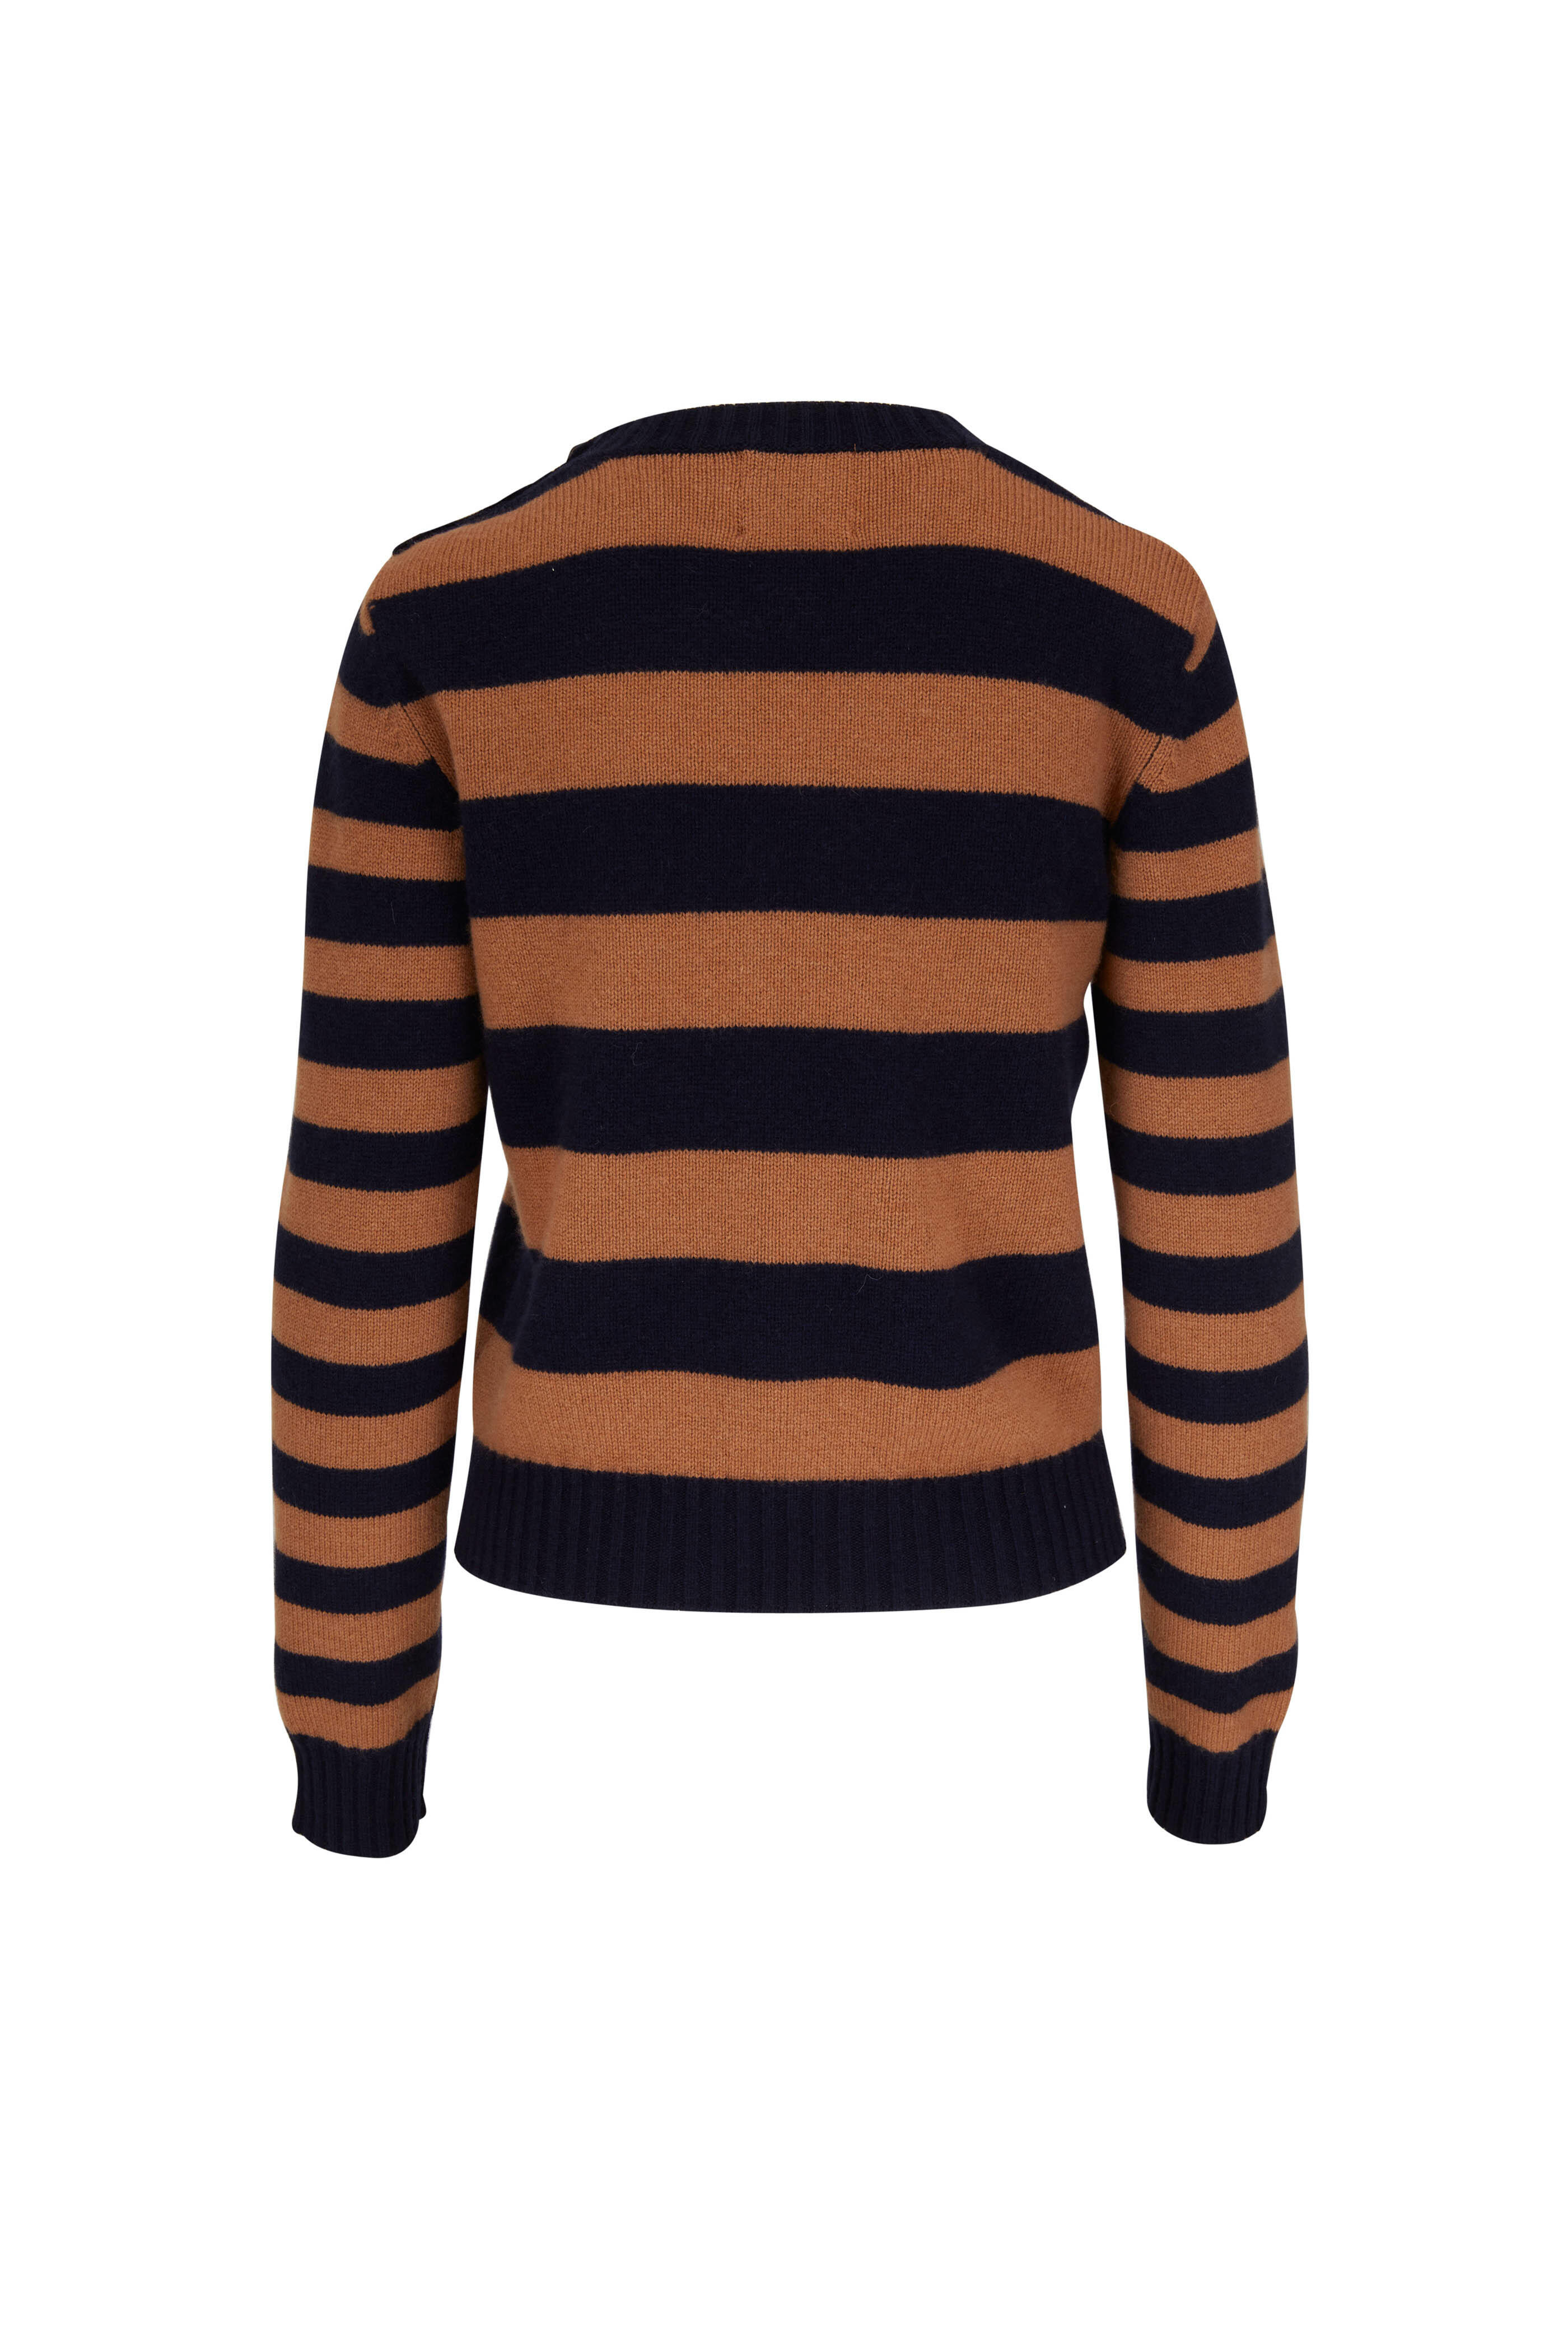 Jumper 1234 - Navy & Stripe Cashmere Camel Sweater